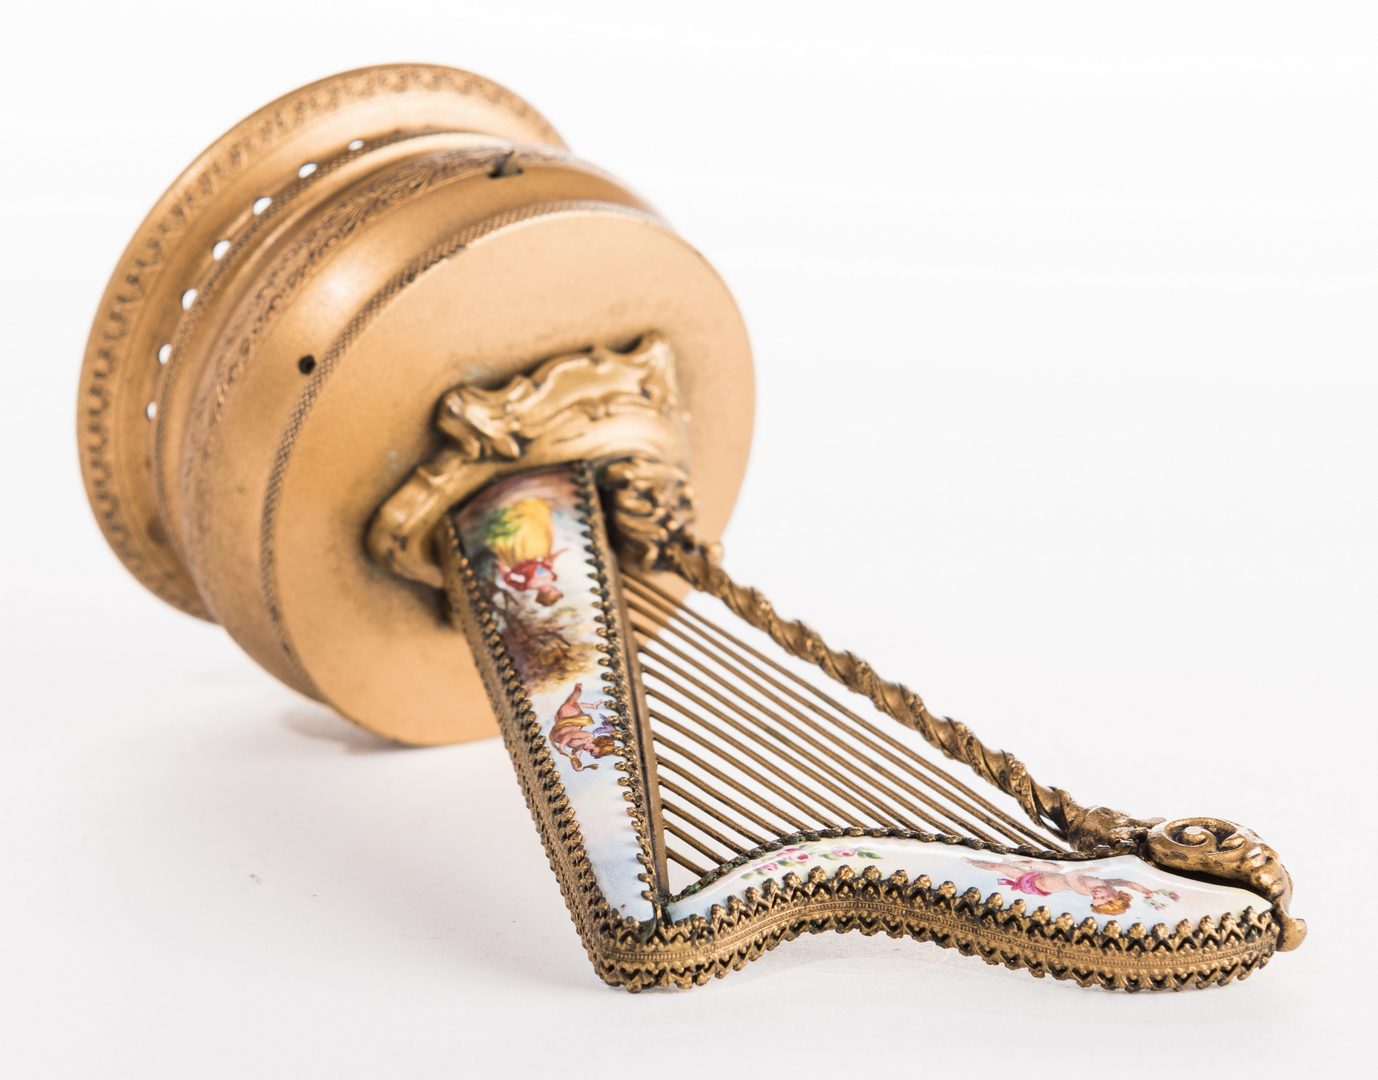 Lot 46: Viennese Enamel Harp Music Box